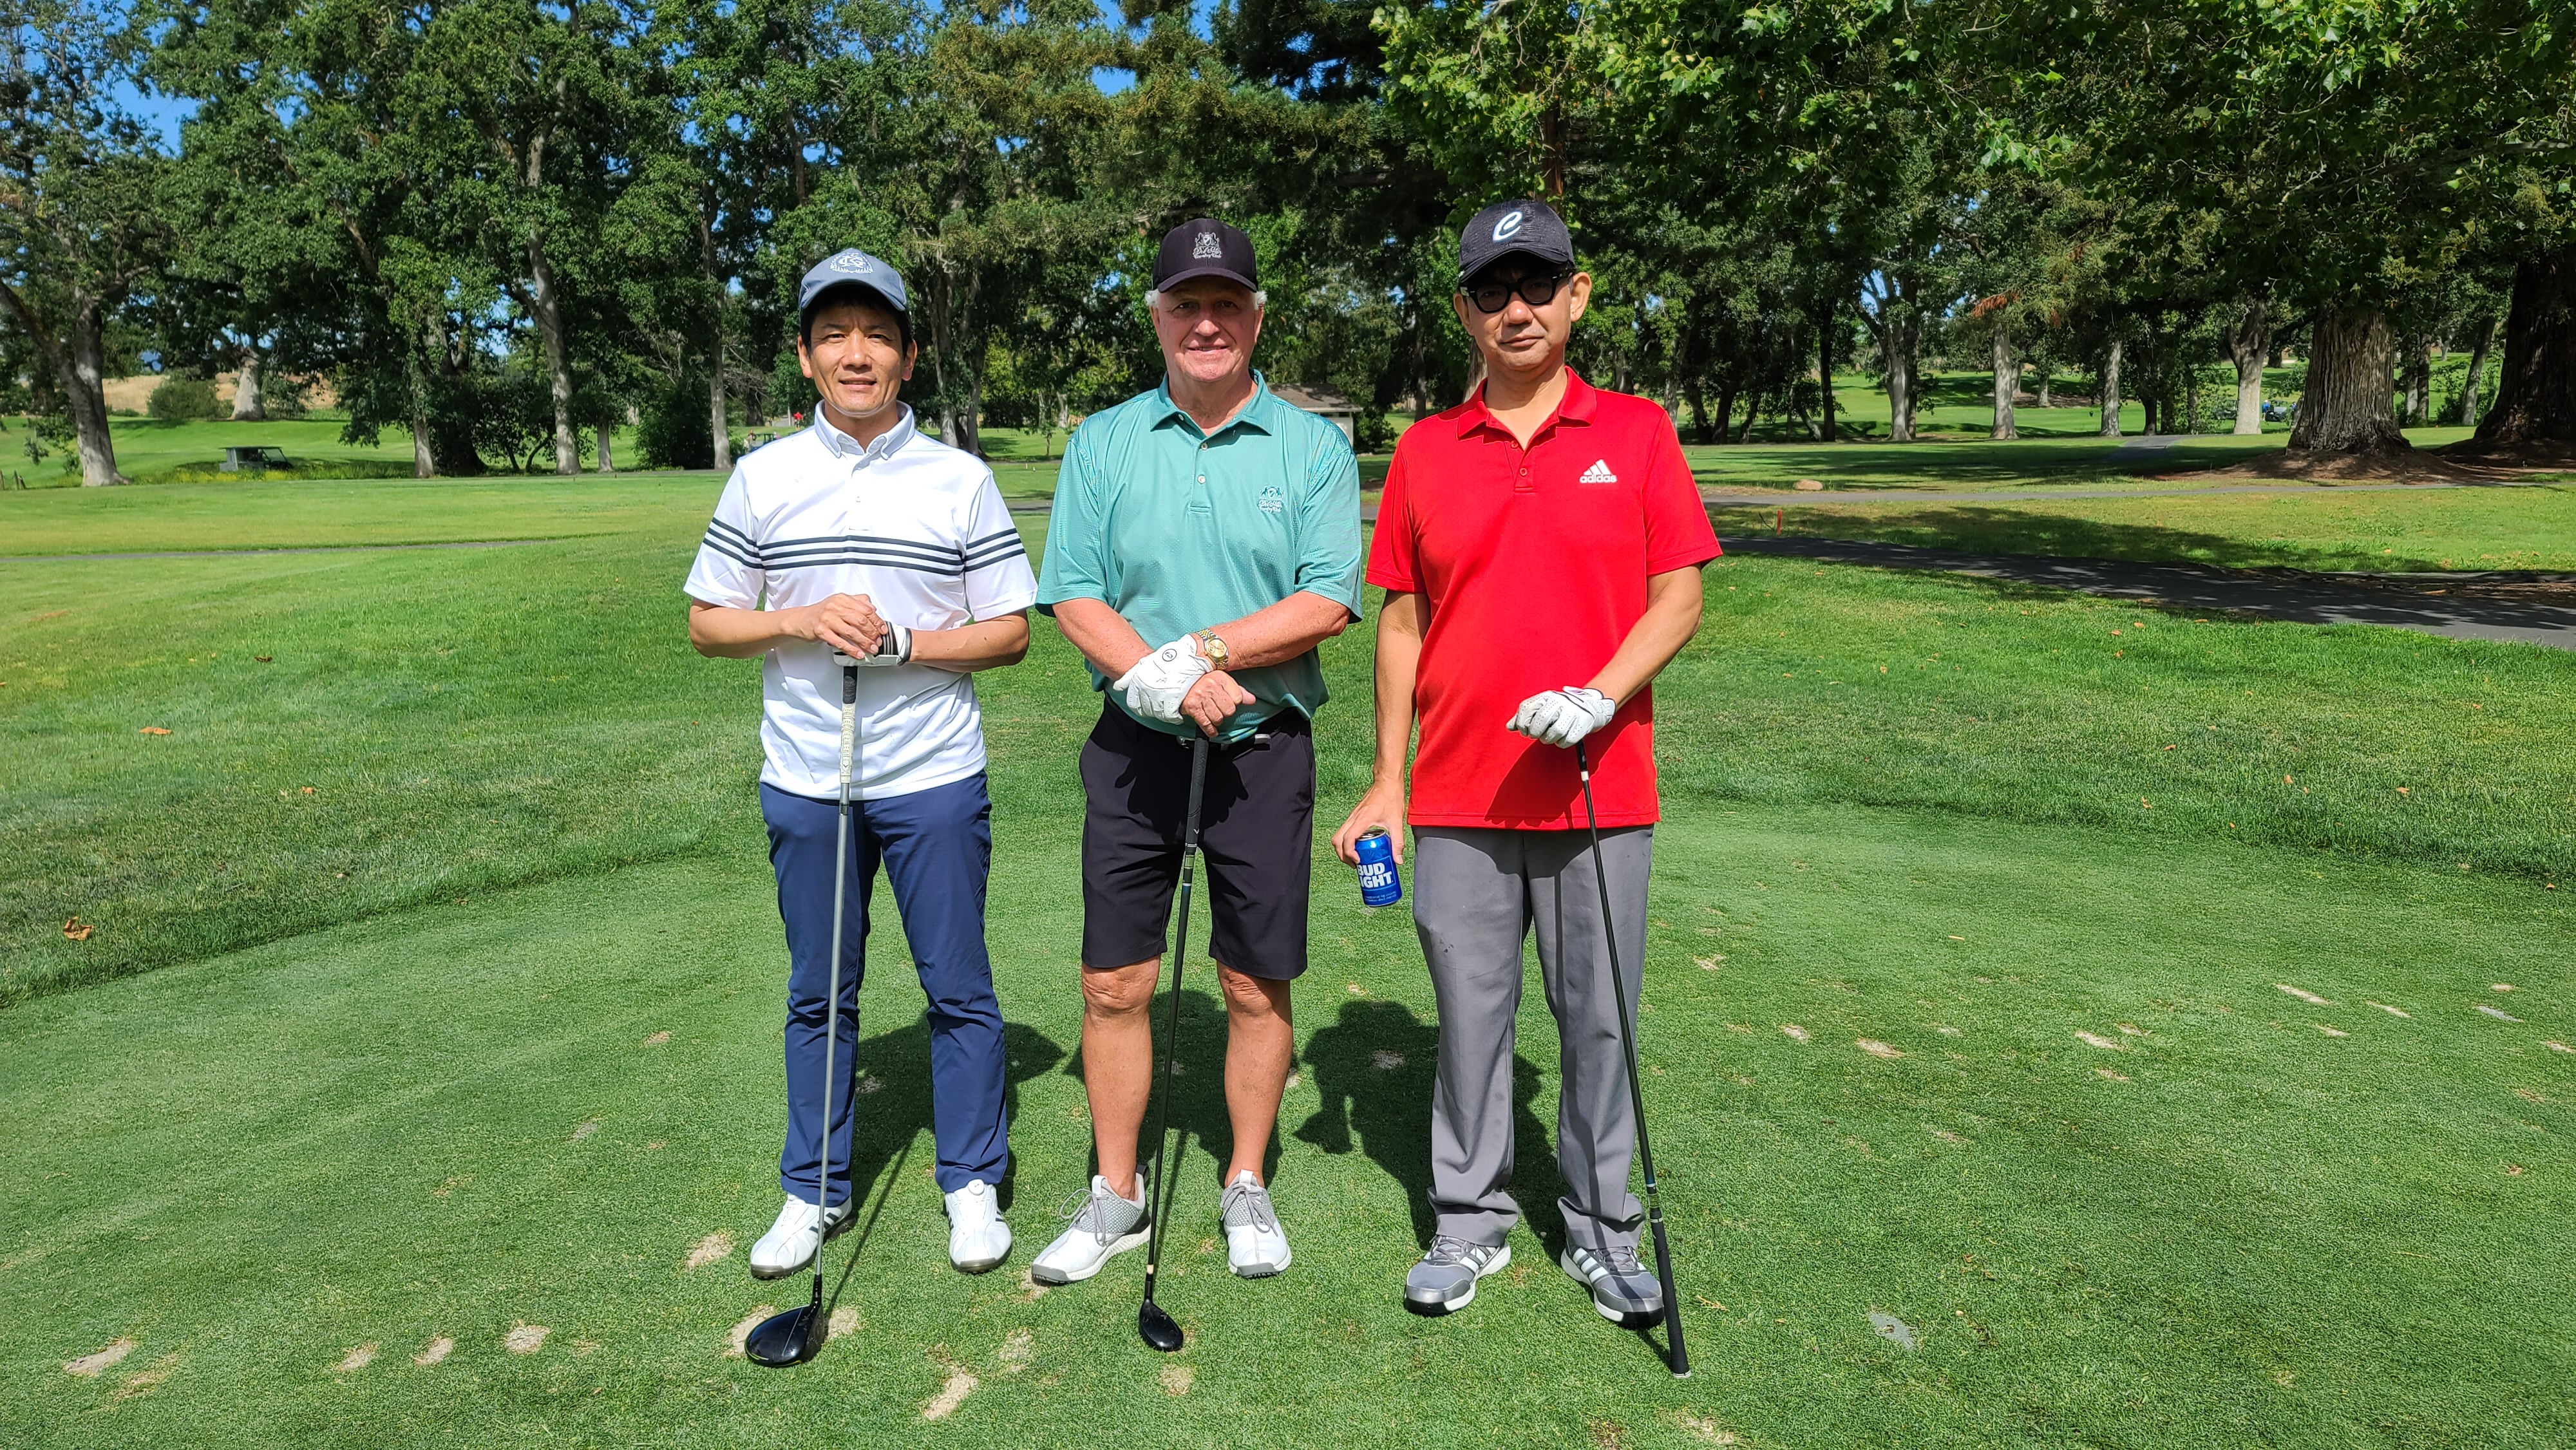 Three men wearing baseball caps standing on grass holding golf clubs.